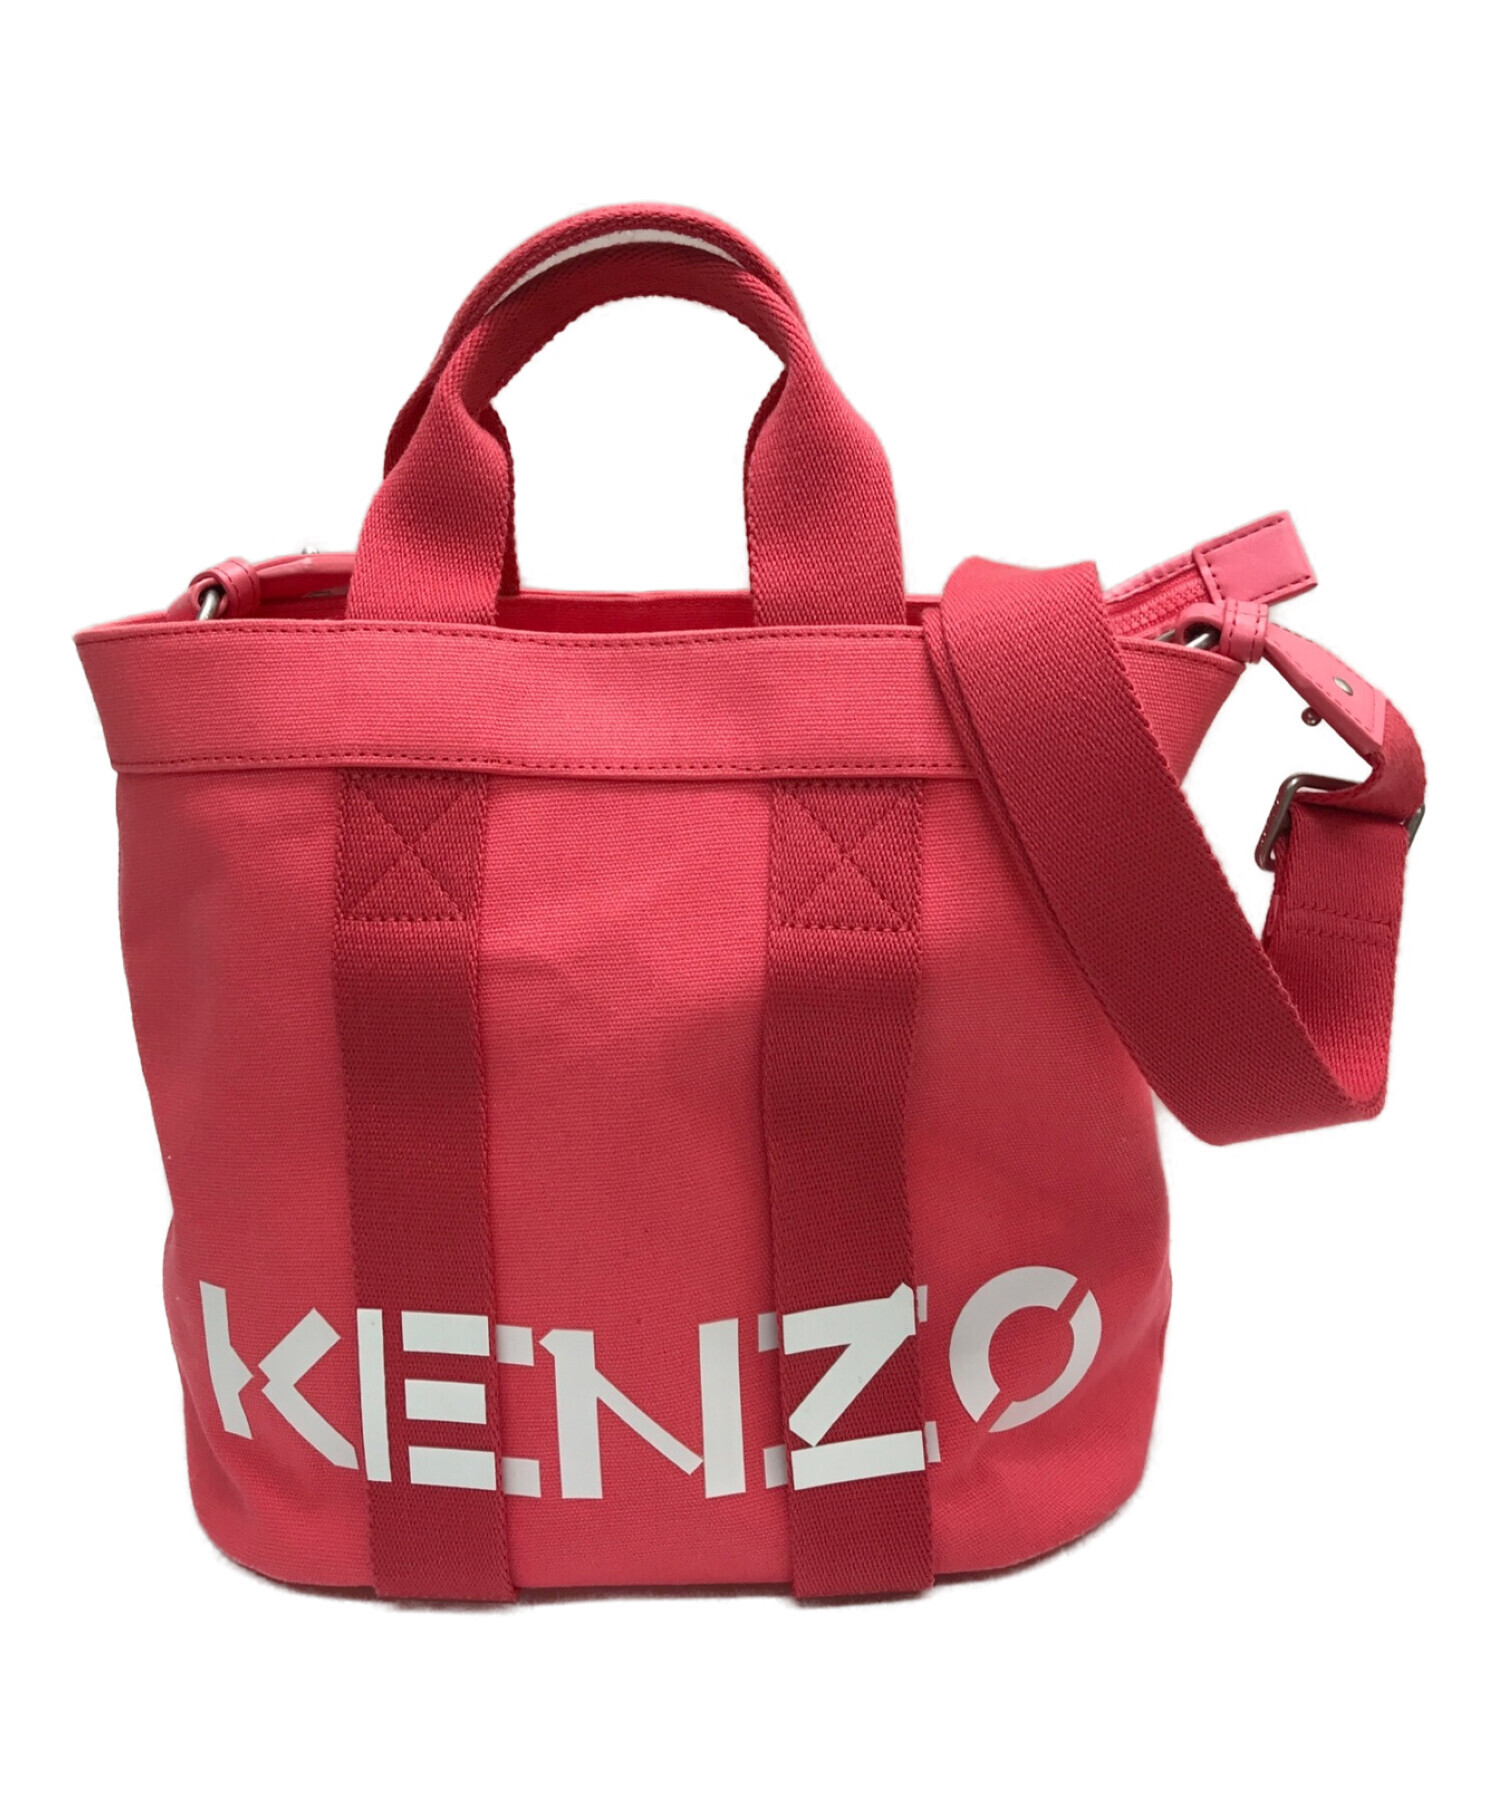 KENZO(ケンゾー) トートバッグ ピンク 半額SALE☆ - トートバッグ